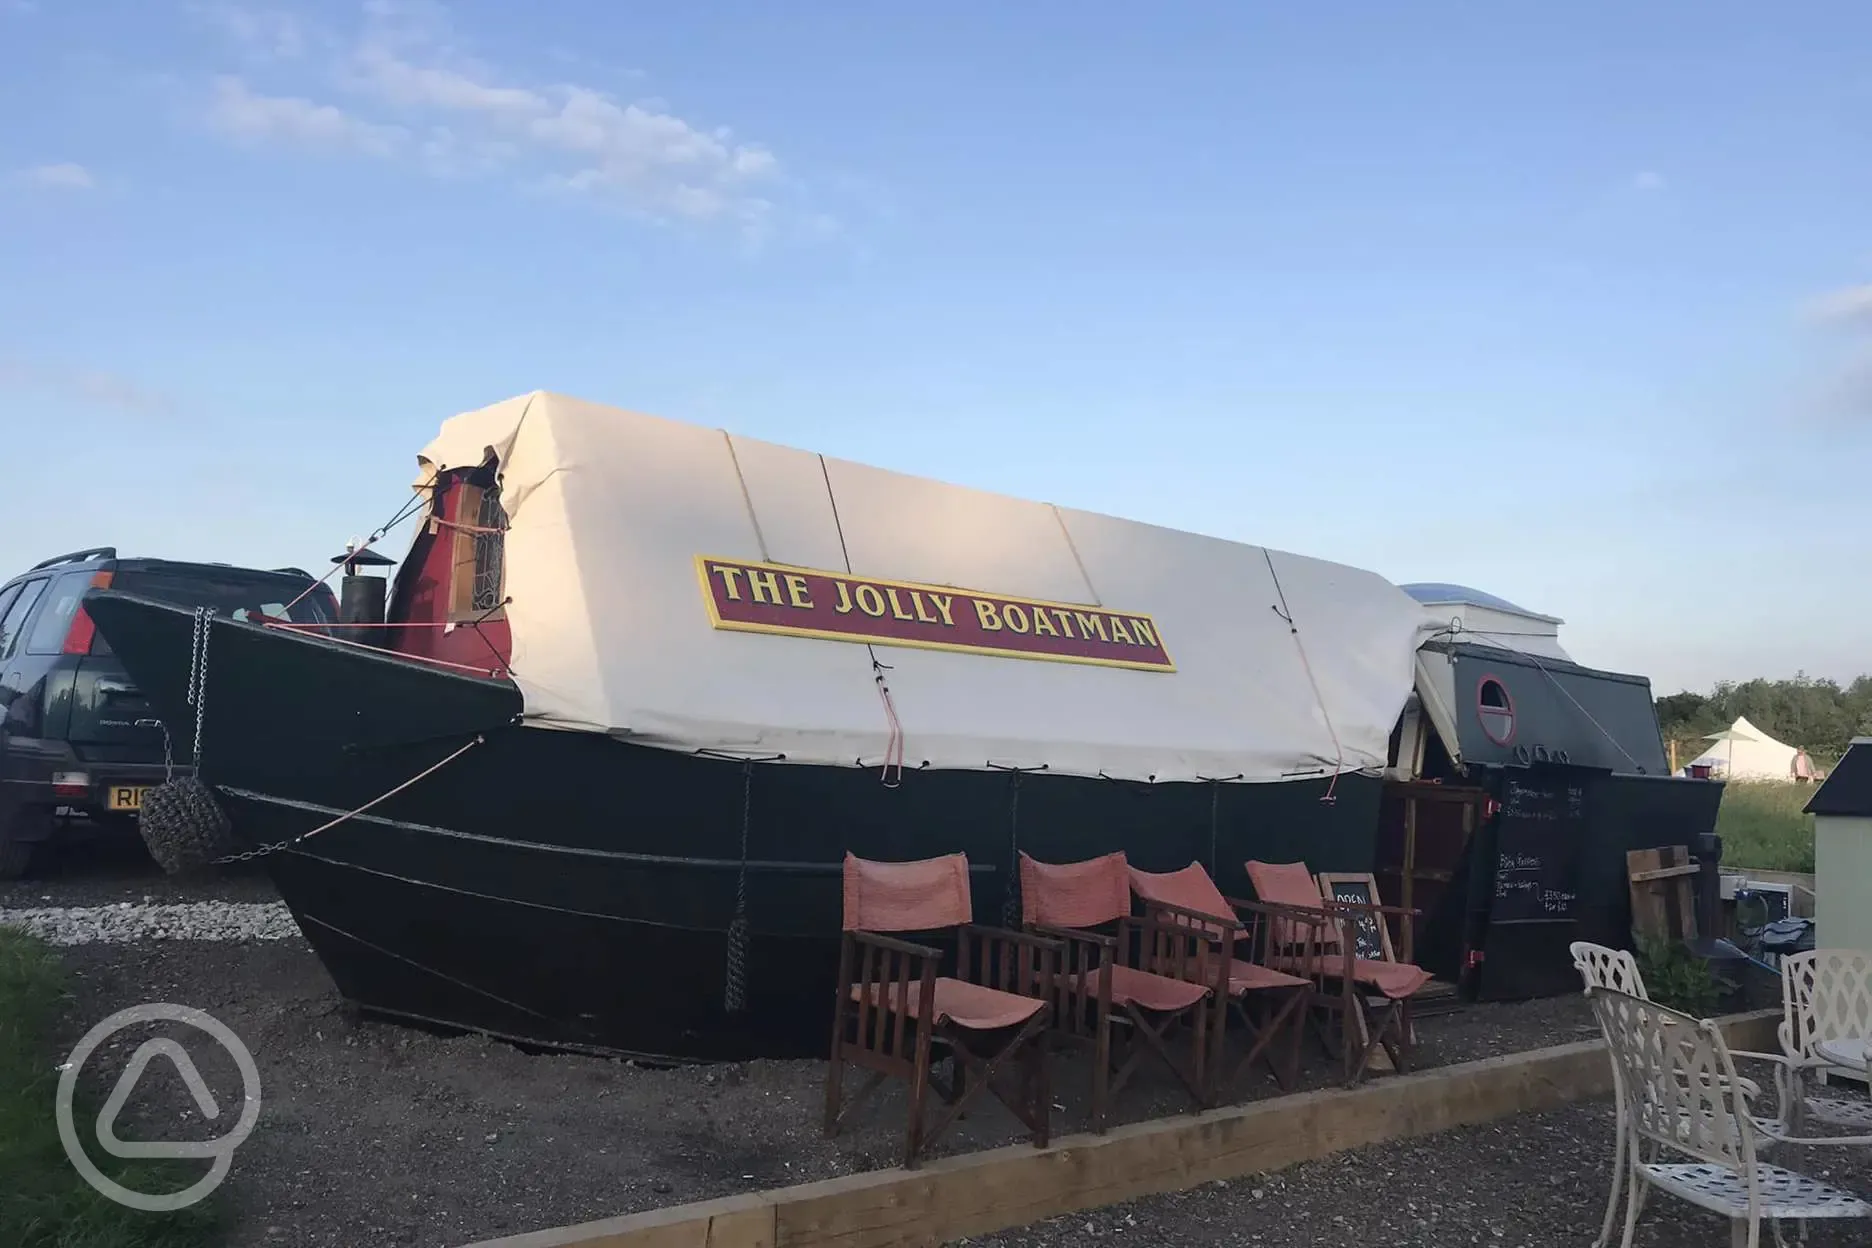 Seasonal pub in a boat